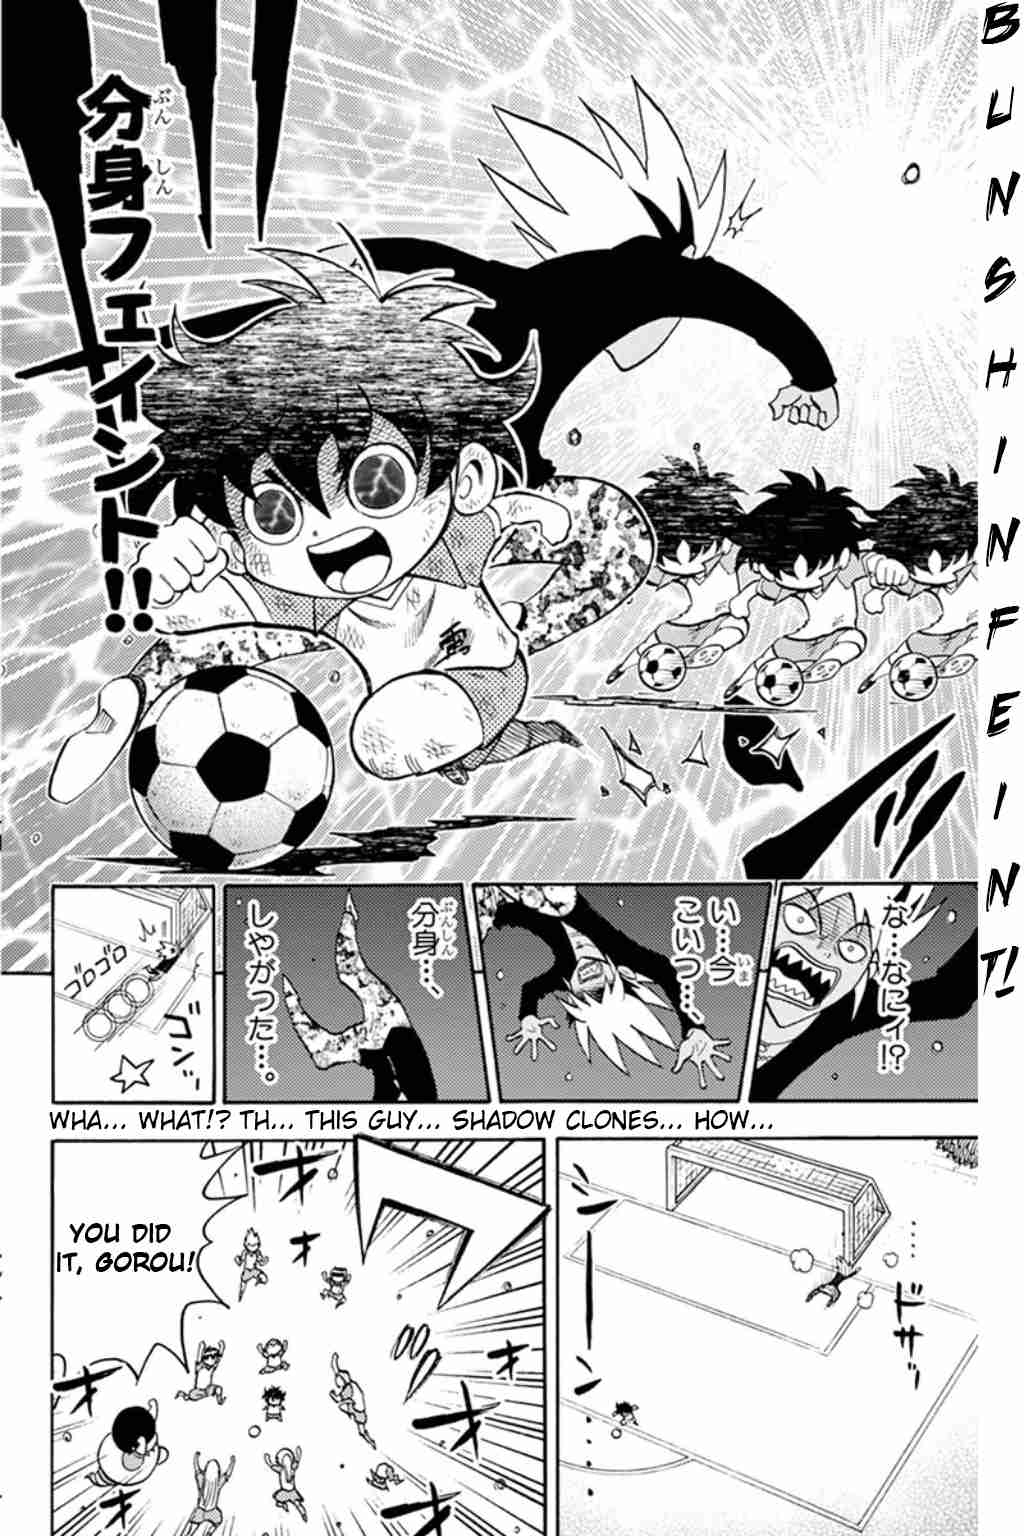 Inazuma Eleven Vol. 2 Ch. 8 Aim for Victory! Super Hard Training Camp!